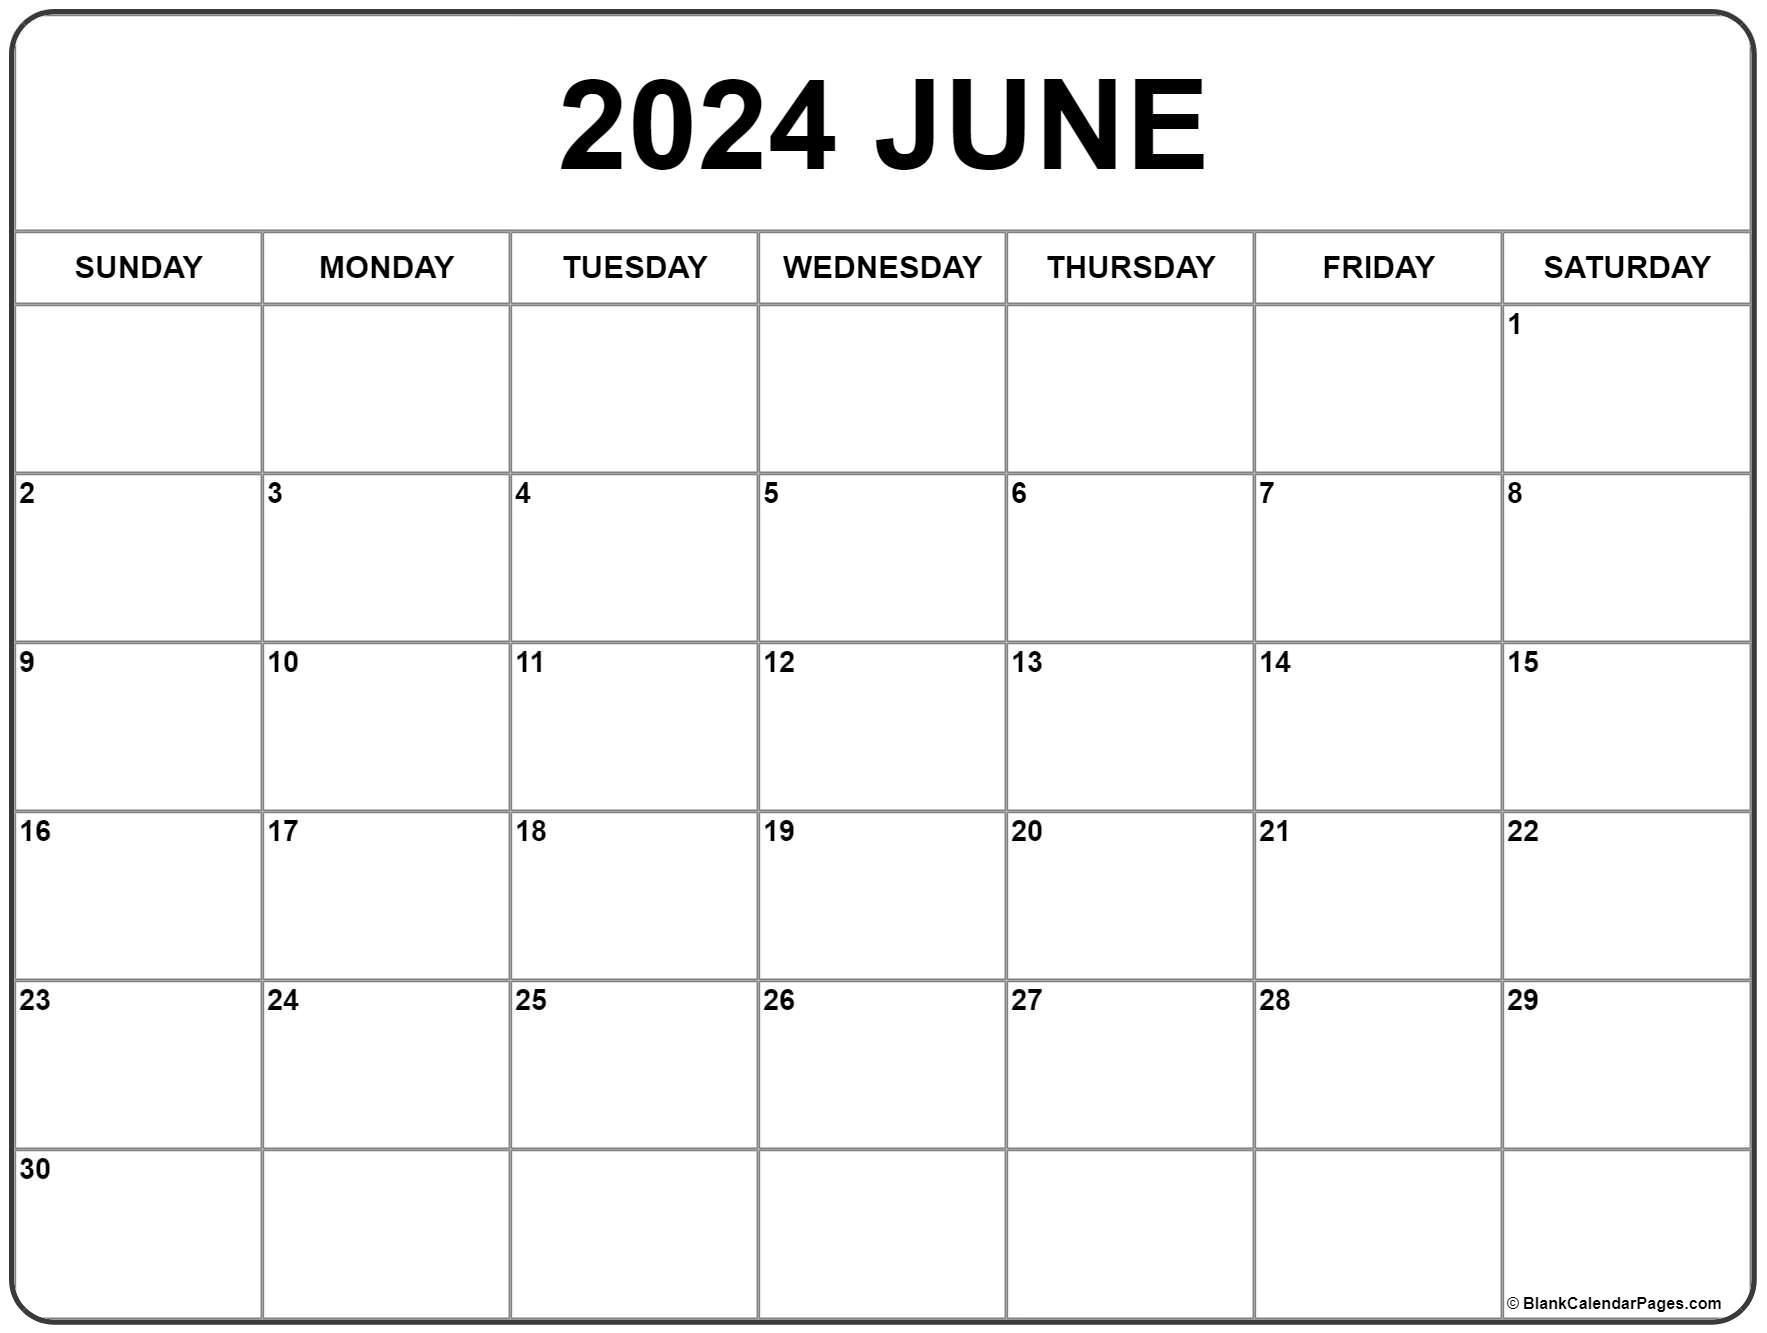 June 2022 Schedule June 2022 Calendar | Free Printable Calendar Templates